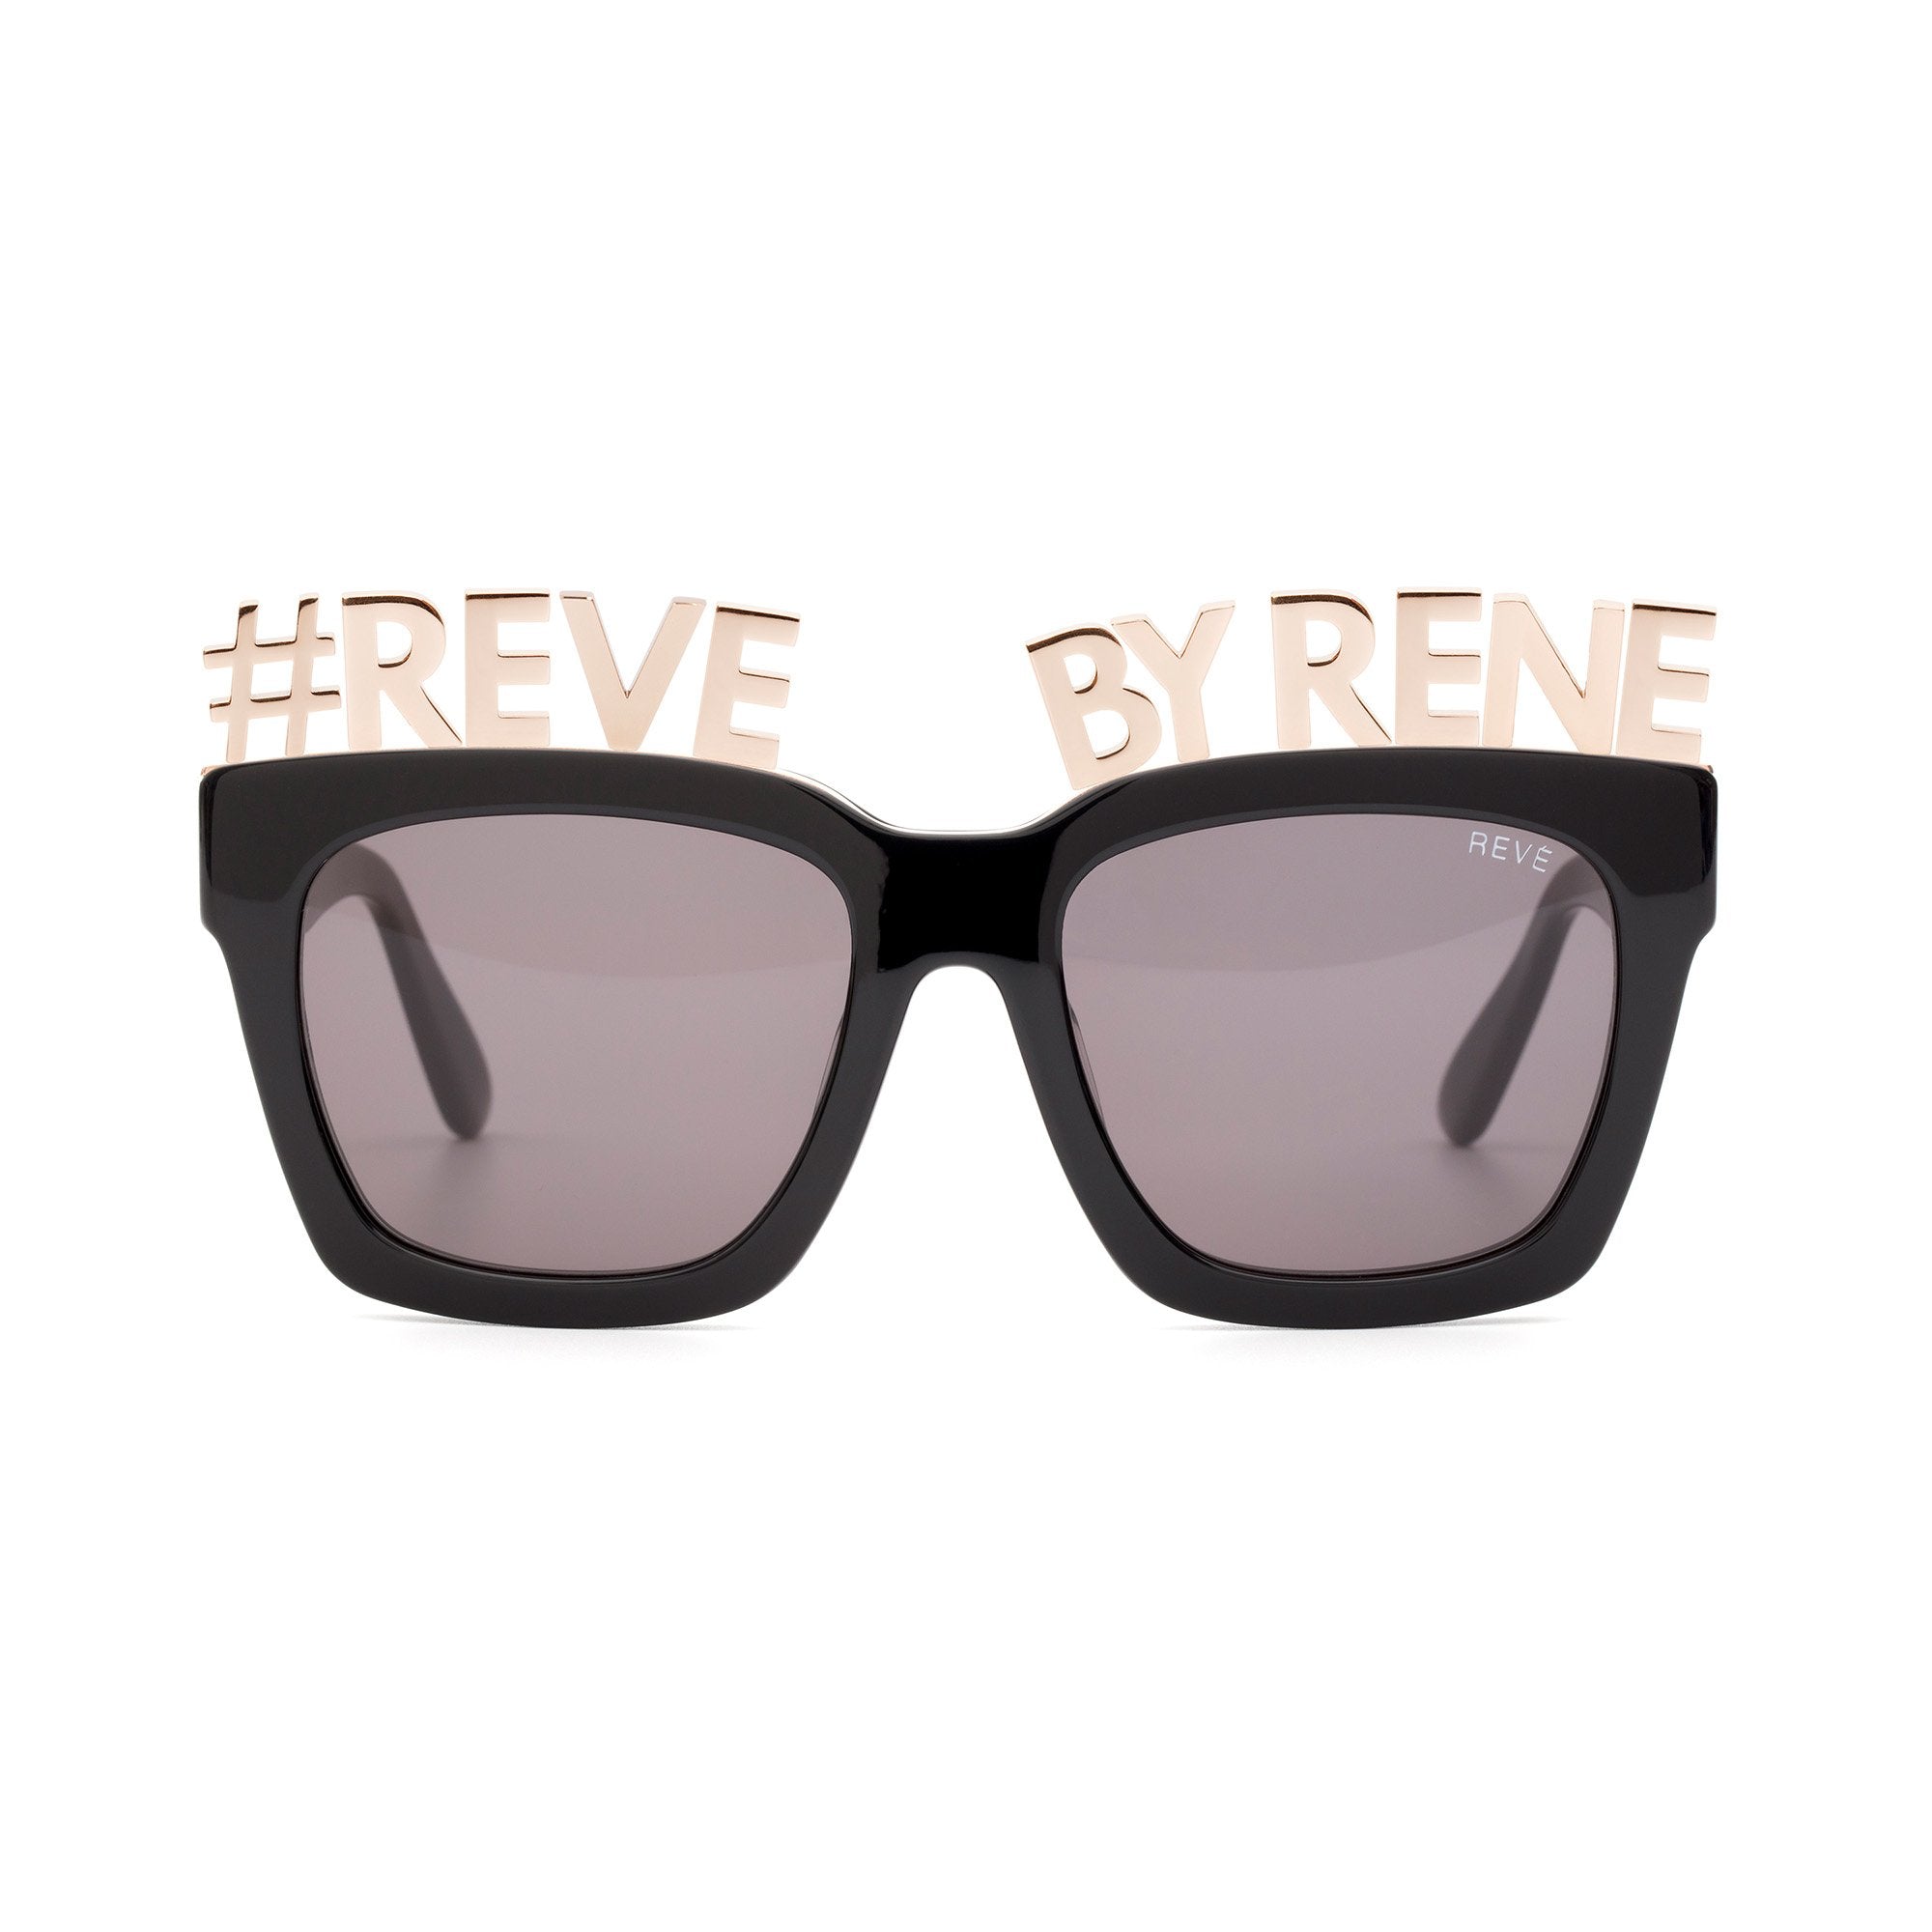 Reve by Rene alphabet sunglasses